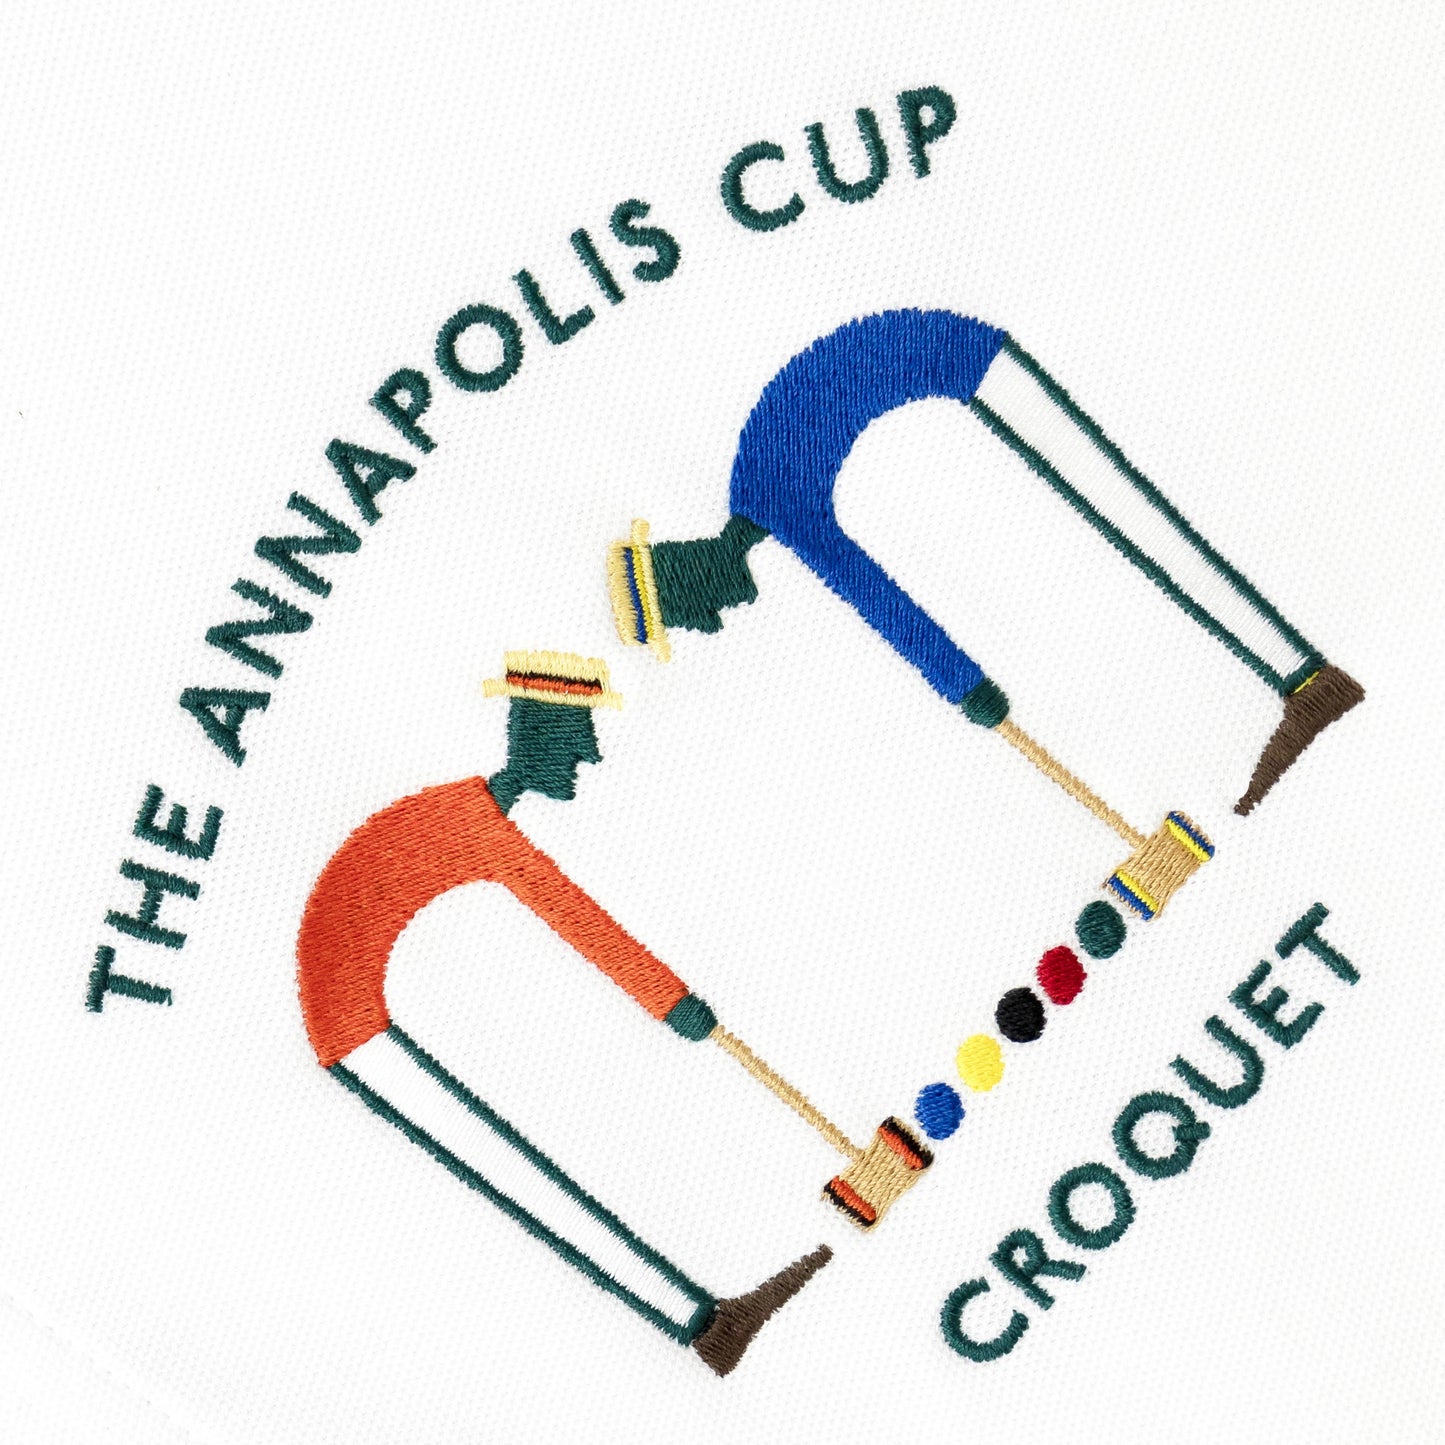 The Annapolis Cup Polo